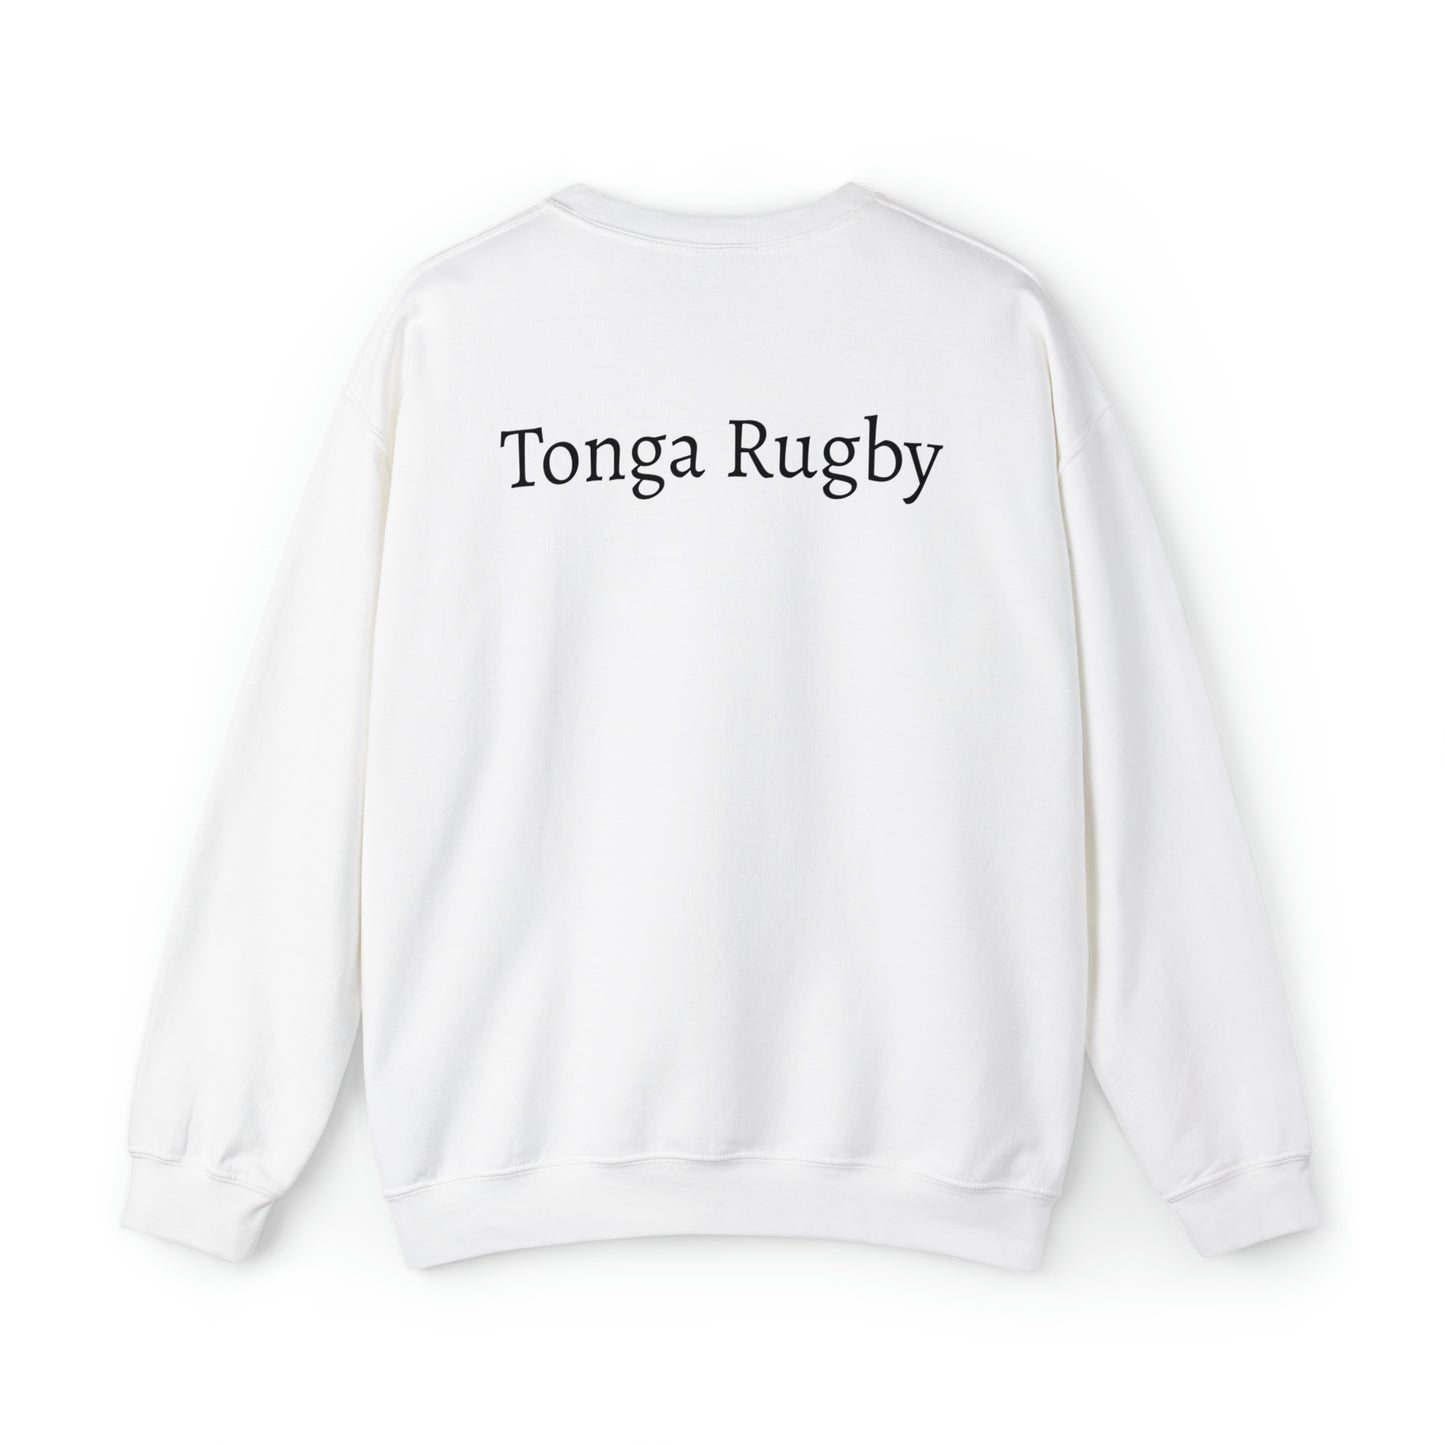 Tonga lifting the RWC - light sweatshirts